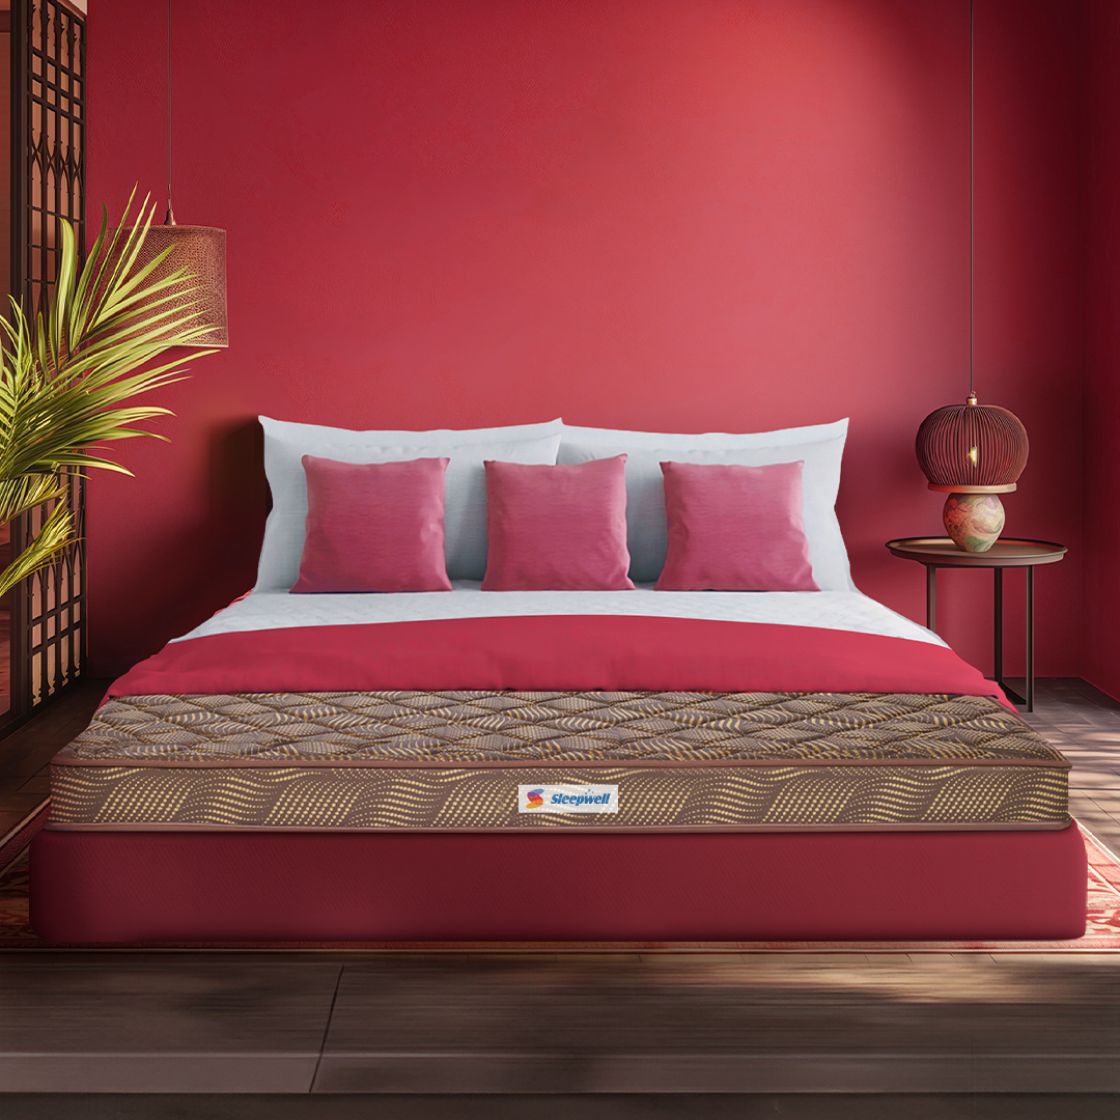 Sleepwell  Champ-Superior PU Foam | 5-inch Single Bed Size | Medium Firm | Anti Sag Tech Mattress (Brown, 84x72x5)